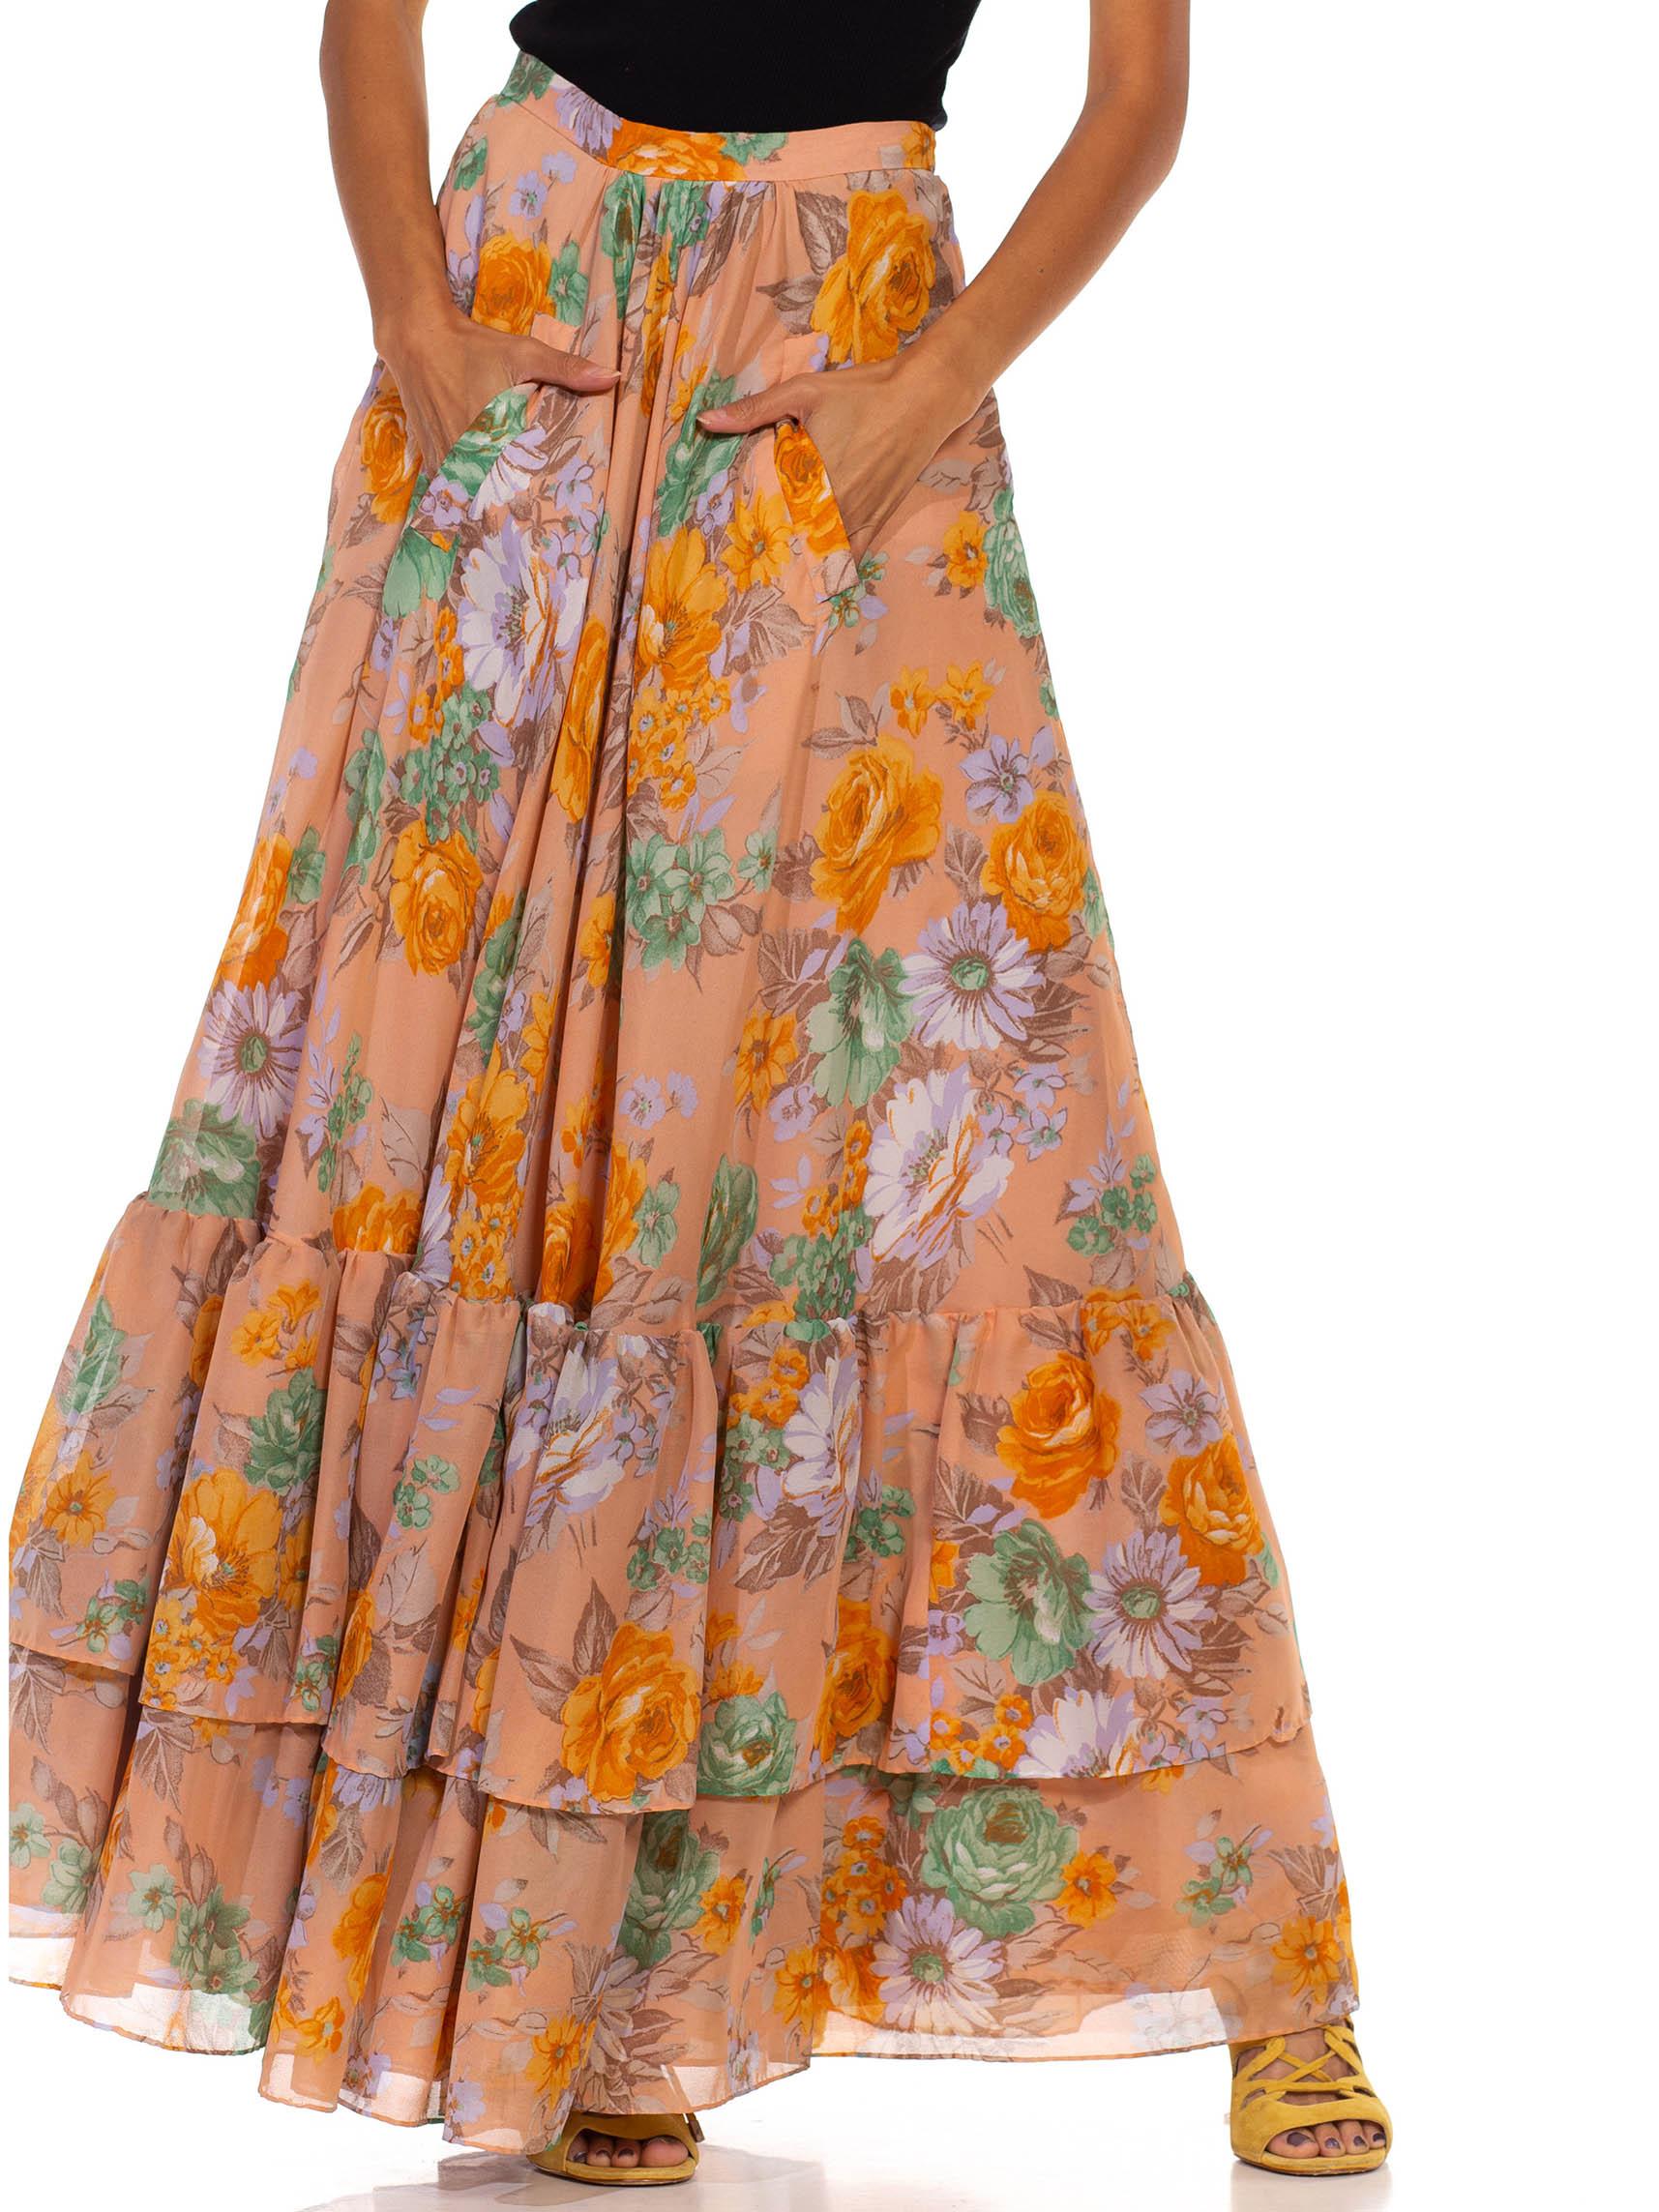 broomstick skirt 1940s